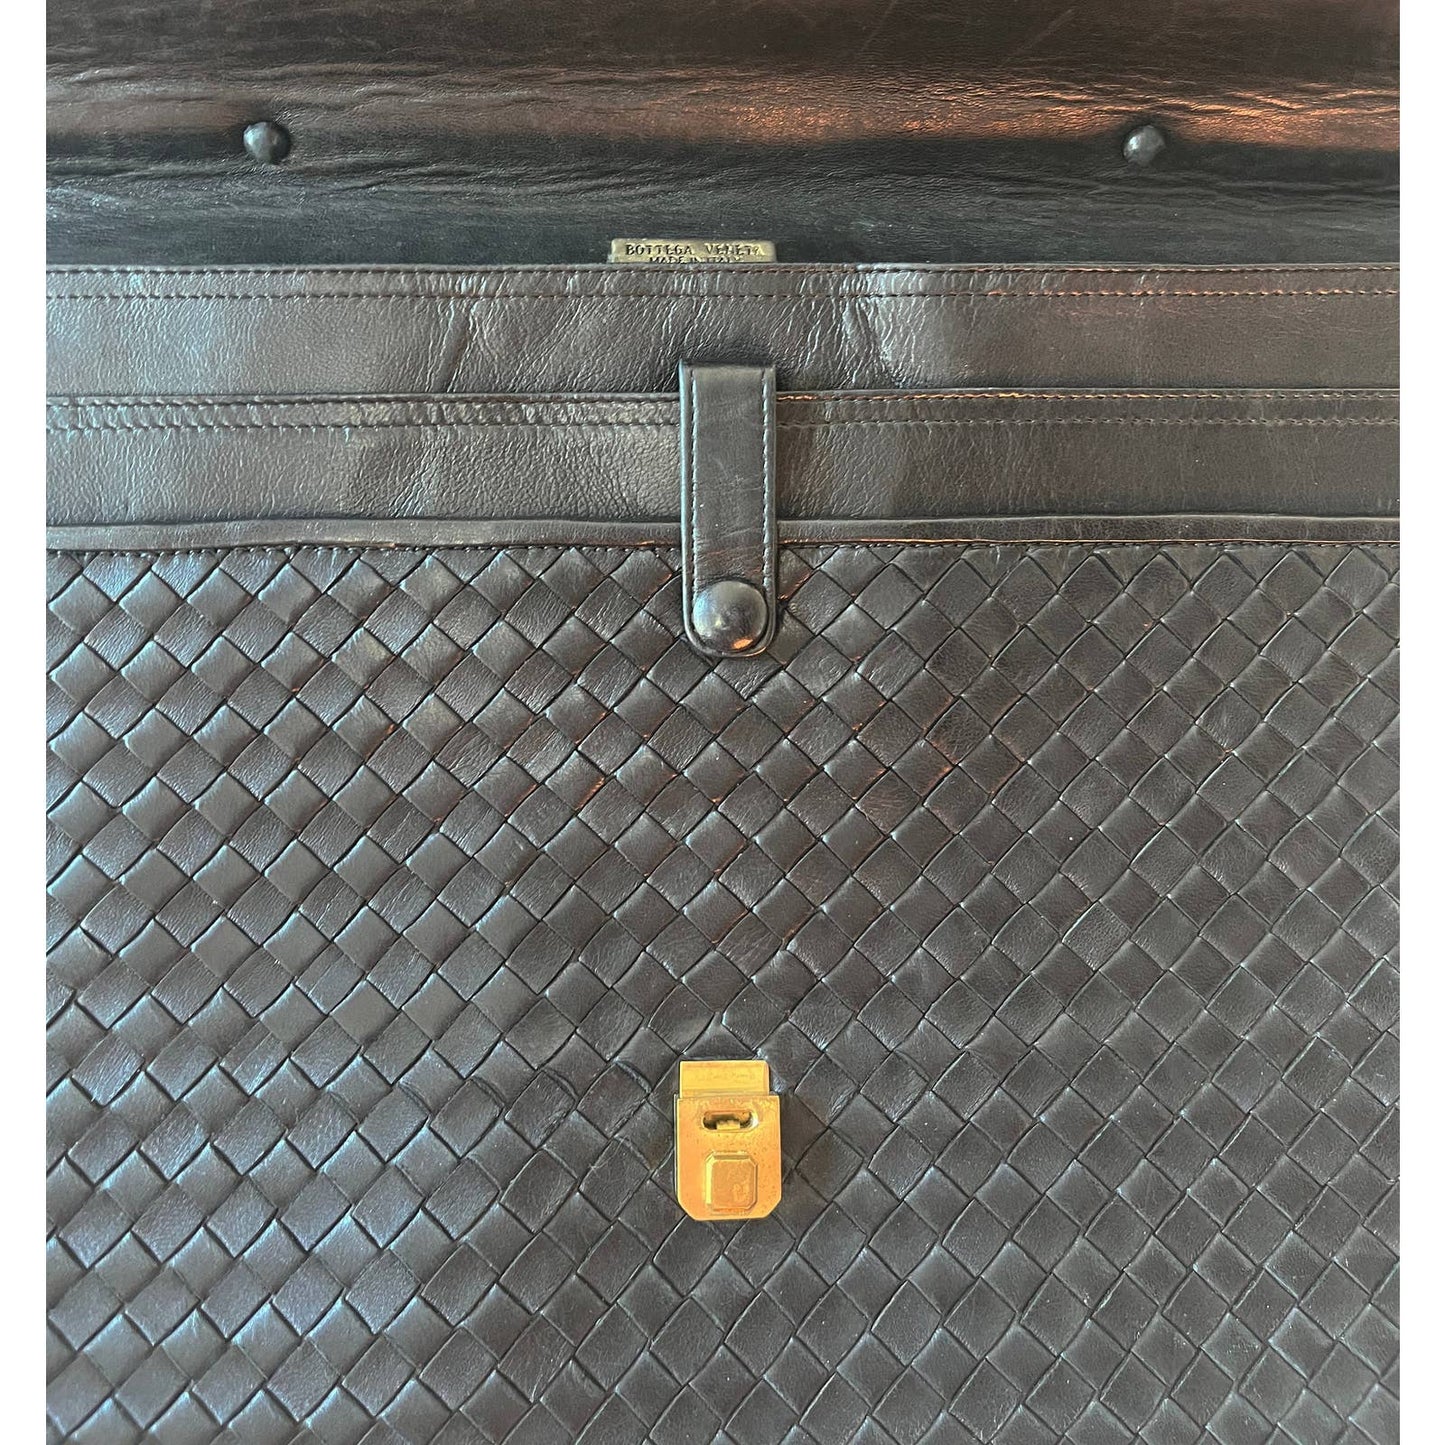 Vintage Black Bottega Veneta Woven Briefcase Bag